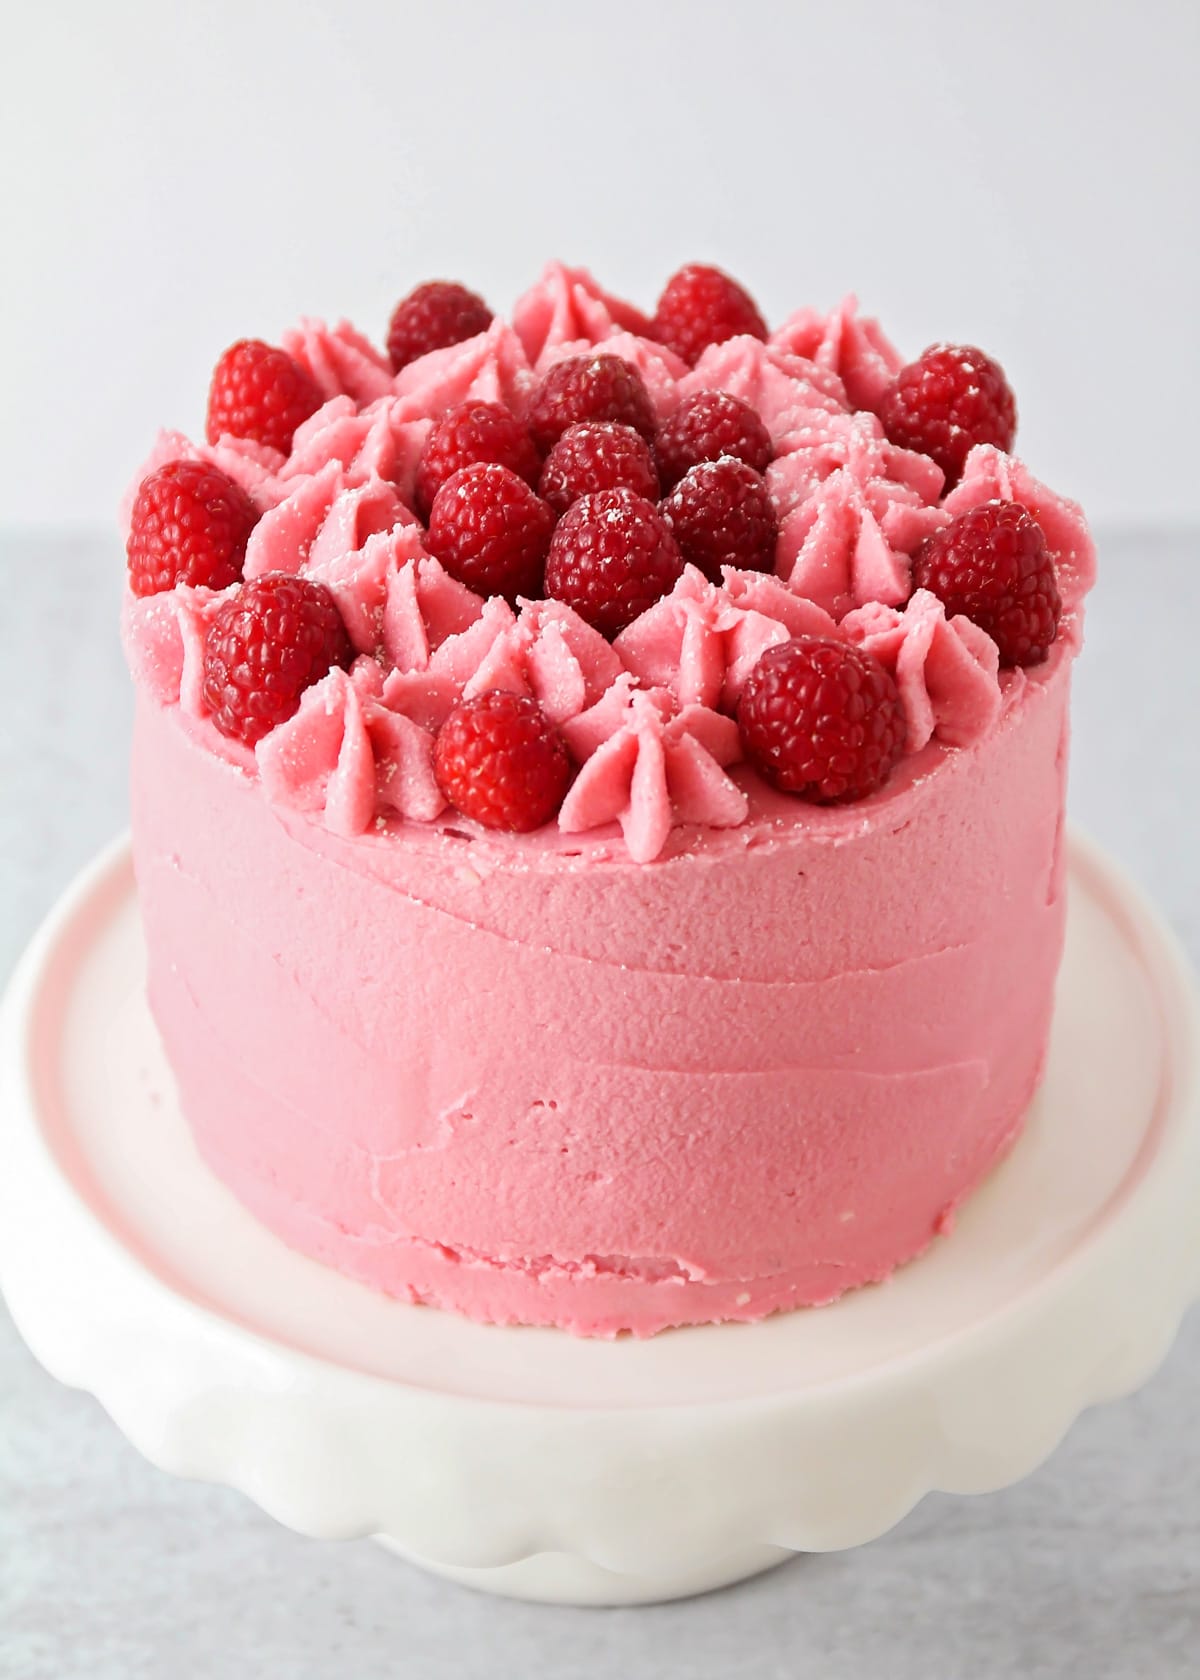 Lemon raspberry cake served on a white cake stand.